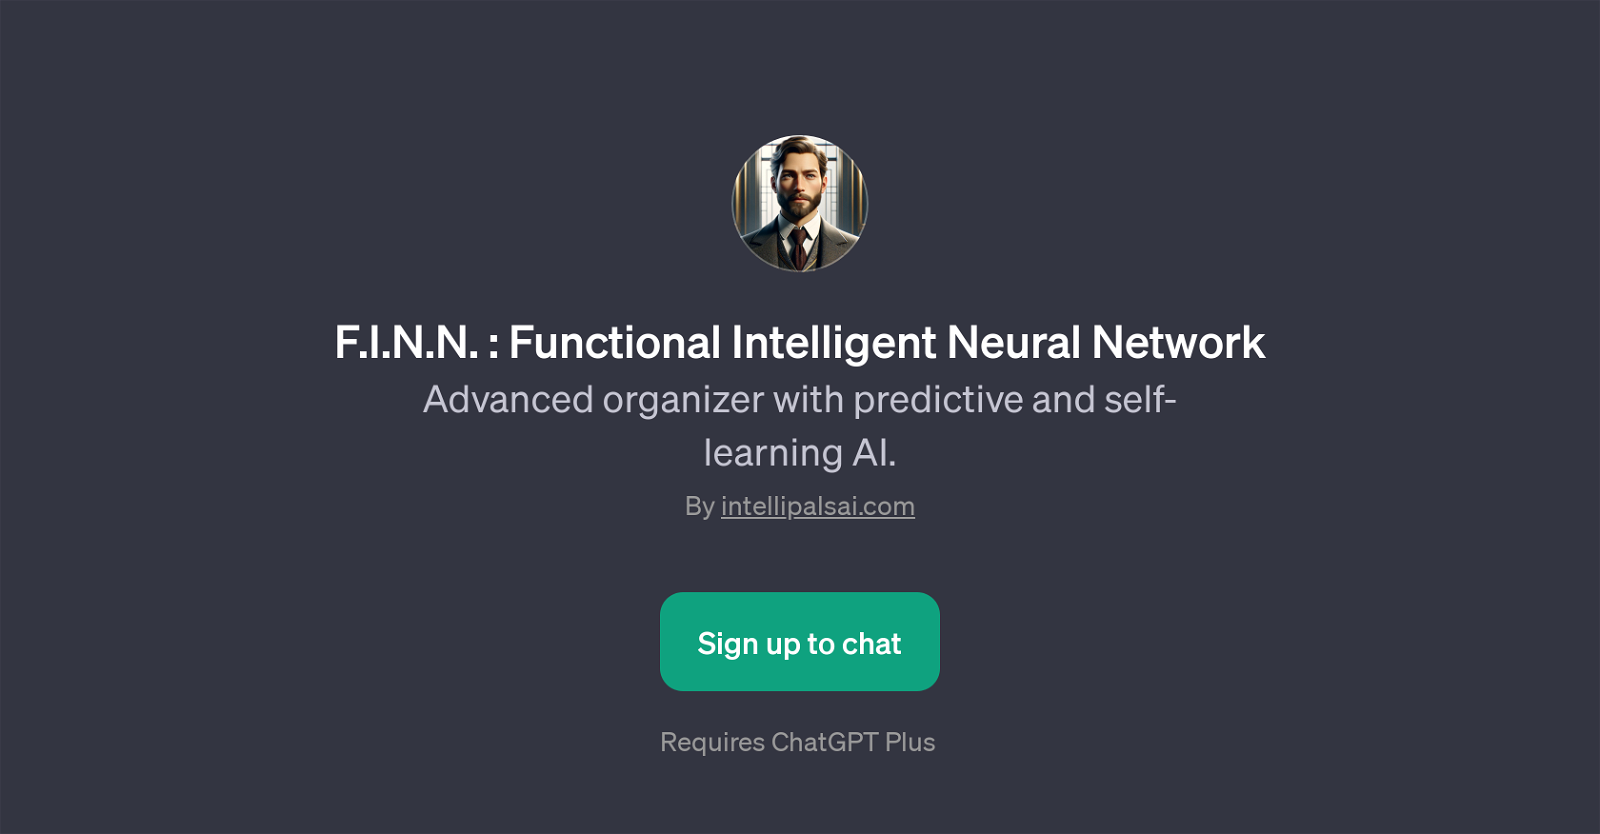 F.I.N.N. : Functional Intelligent Neural Network website